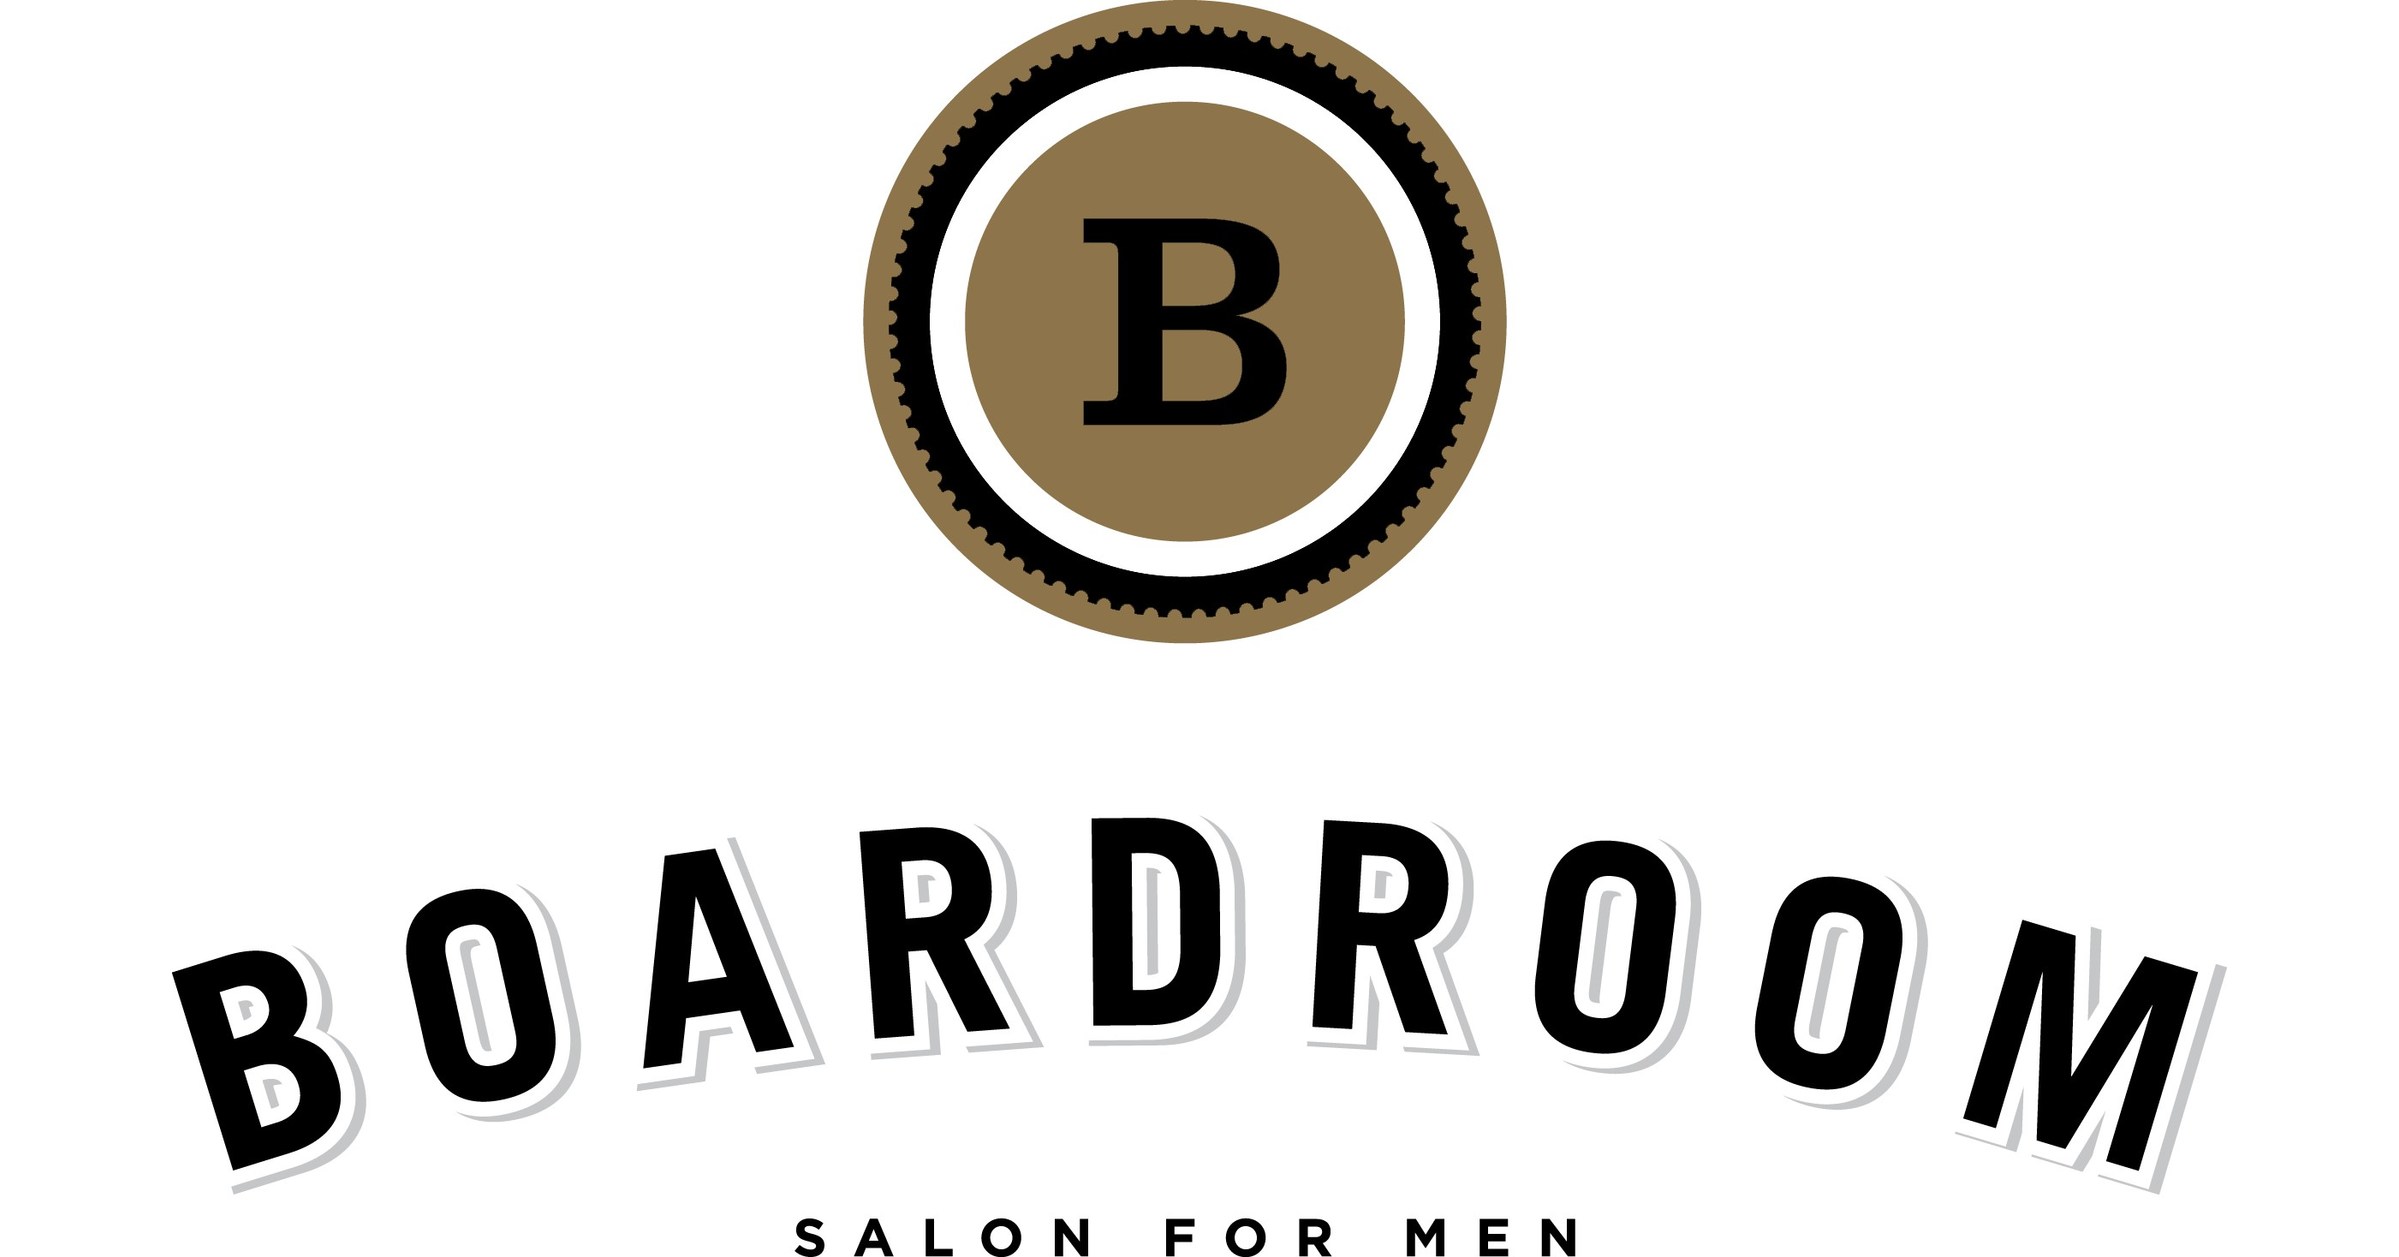 BoardRoom Salon for Men